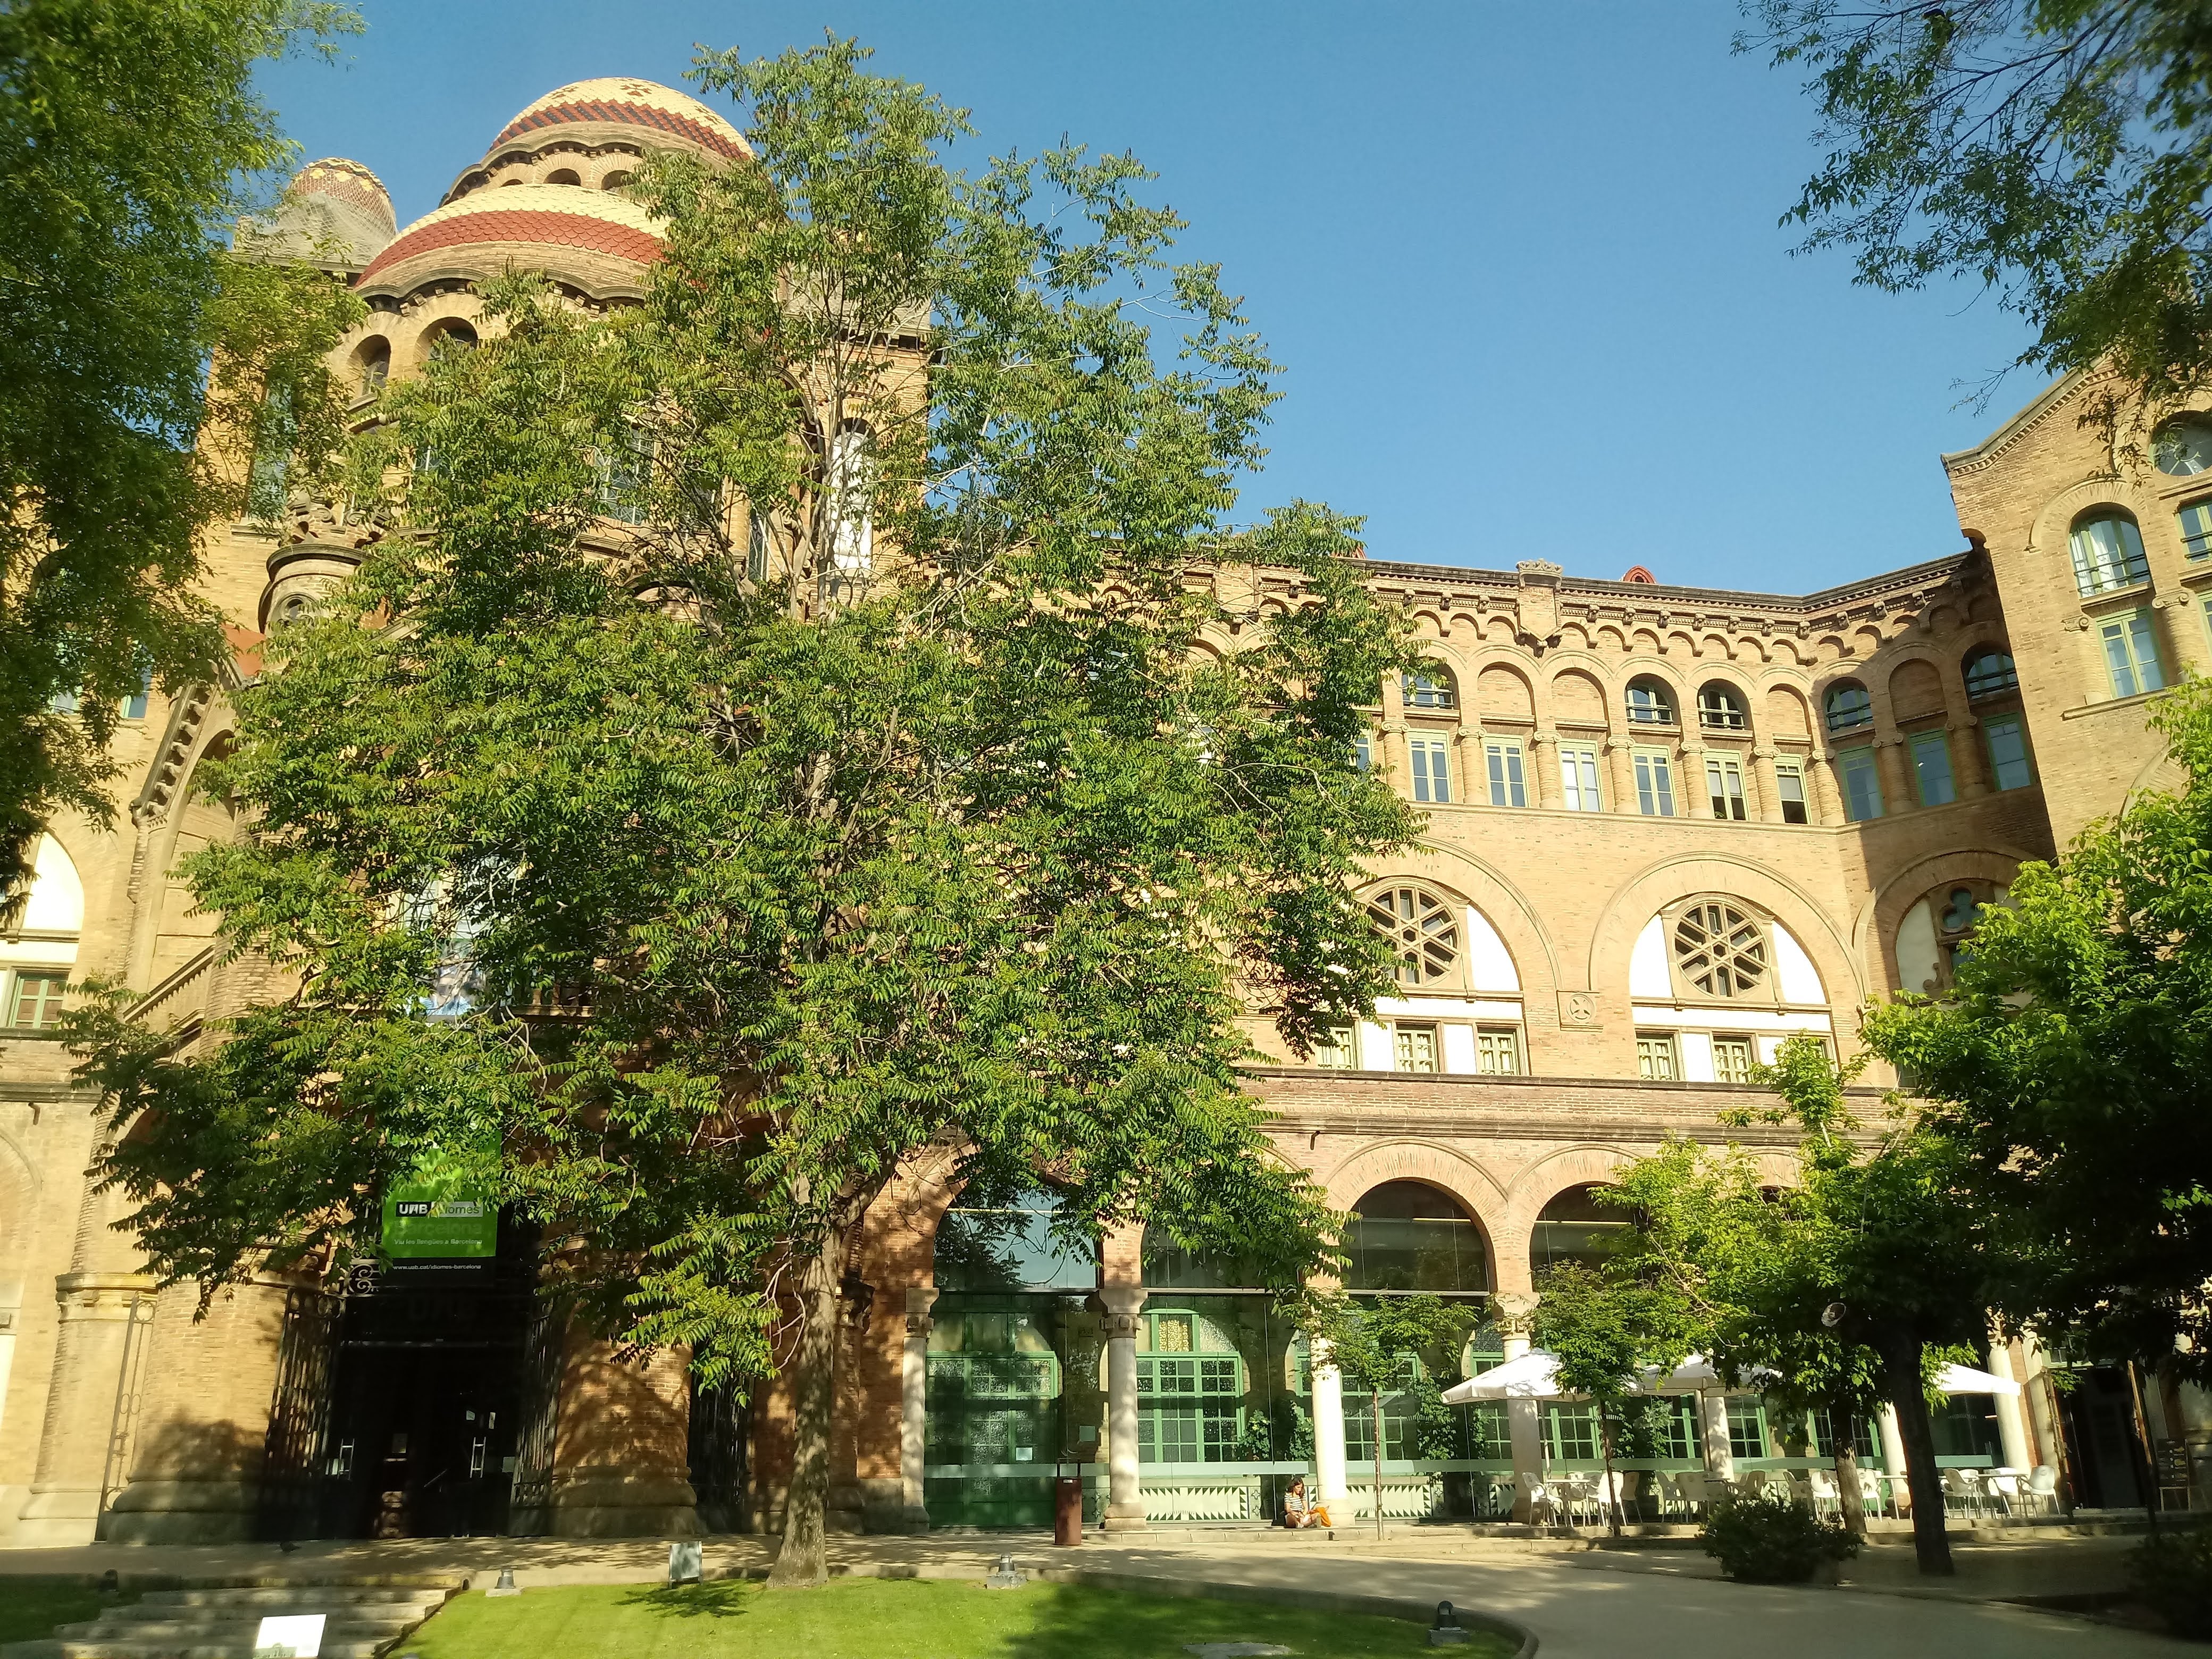 Casa Convalescencia - Hospital de Sant Pau